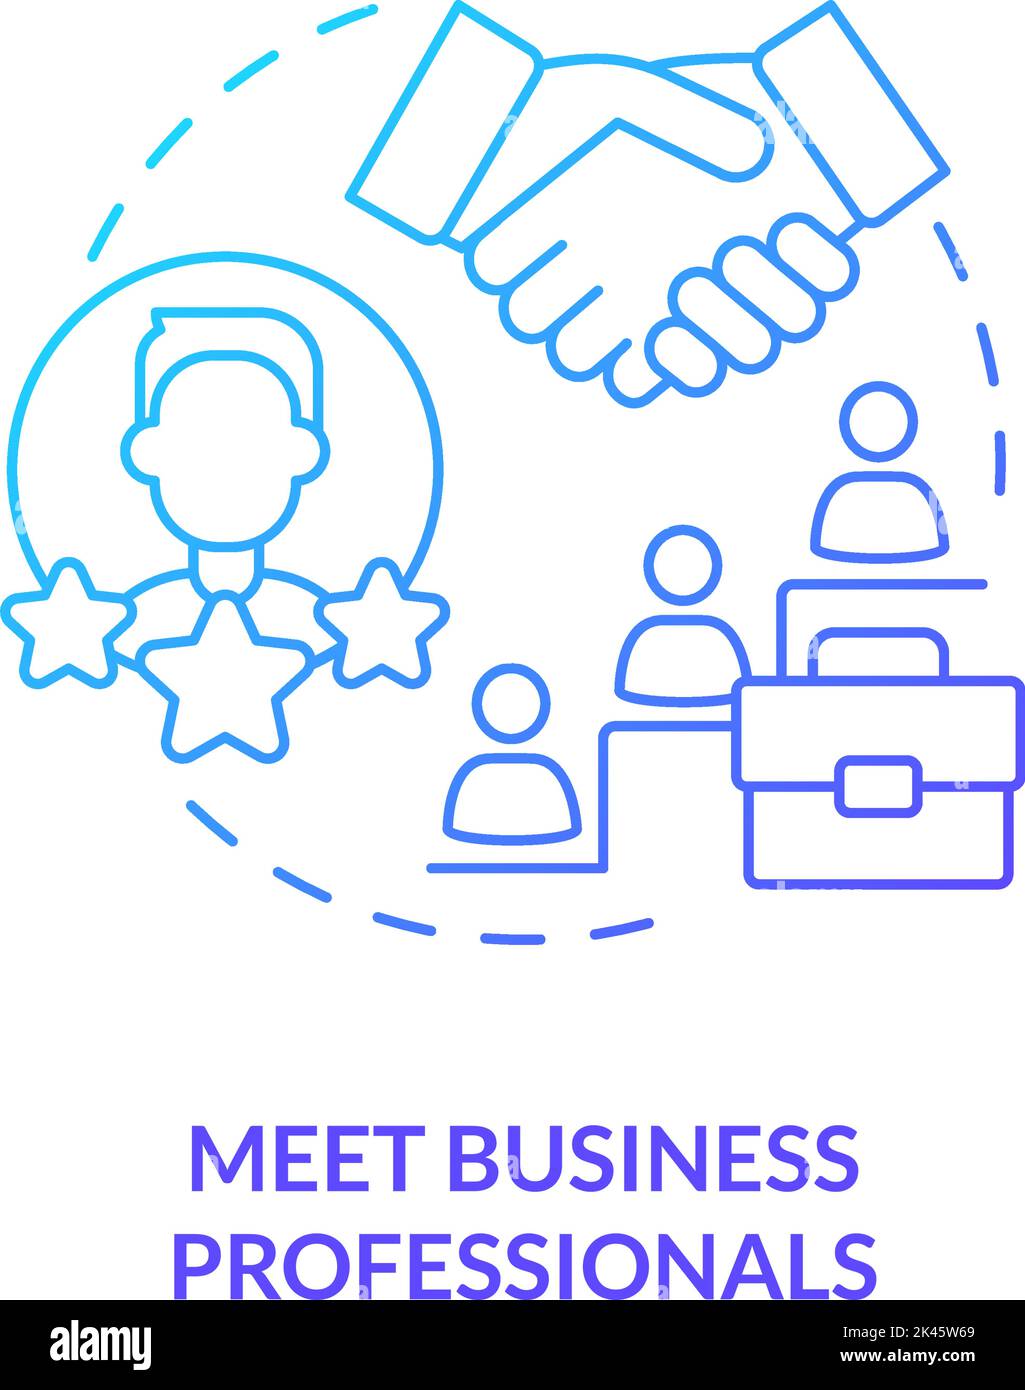 Meet business professionals blue gradient concept icon Stock Vector